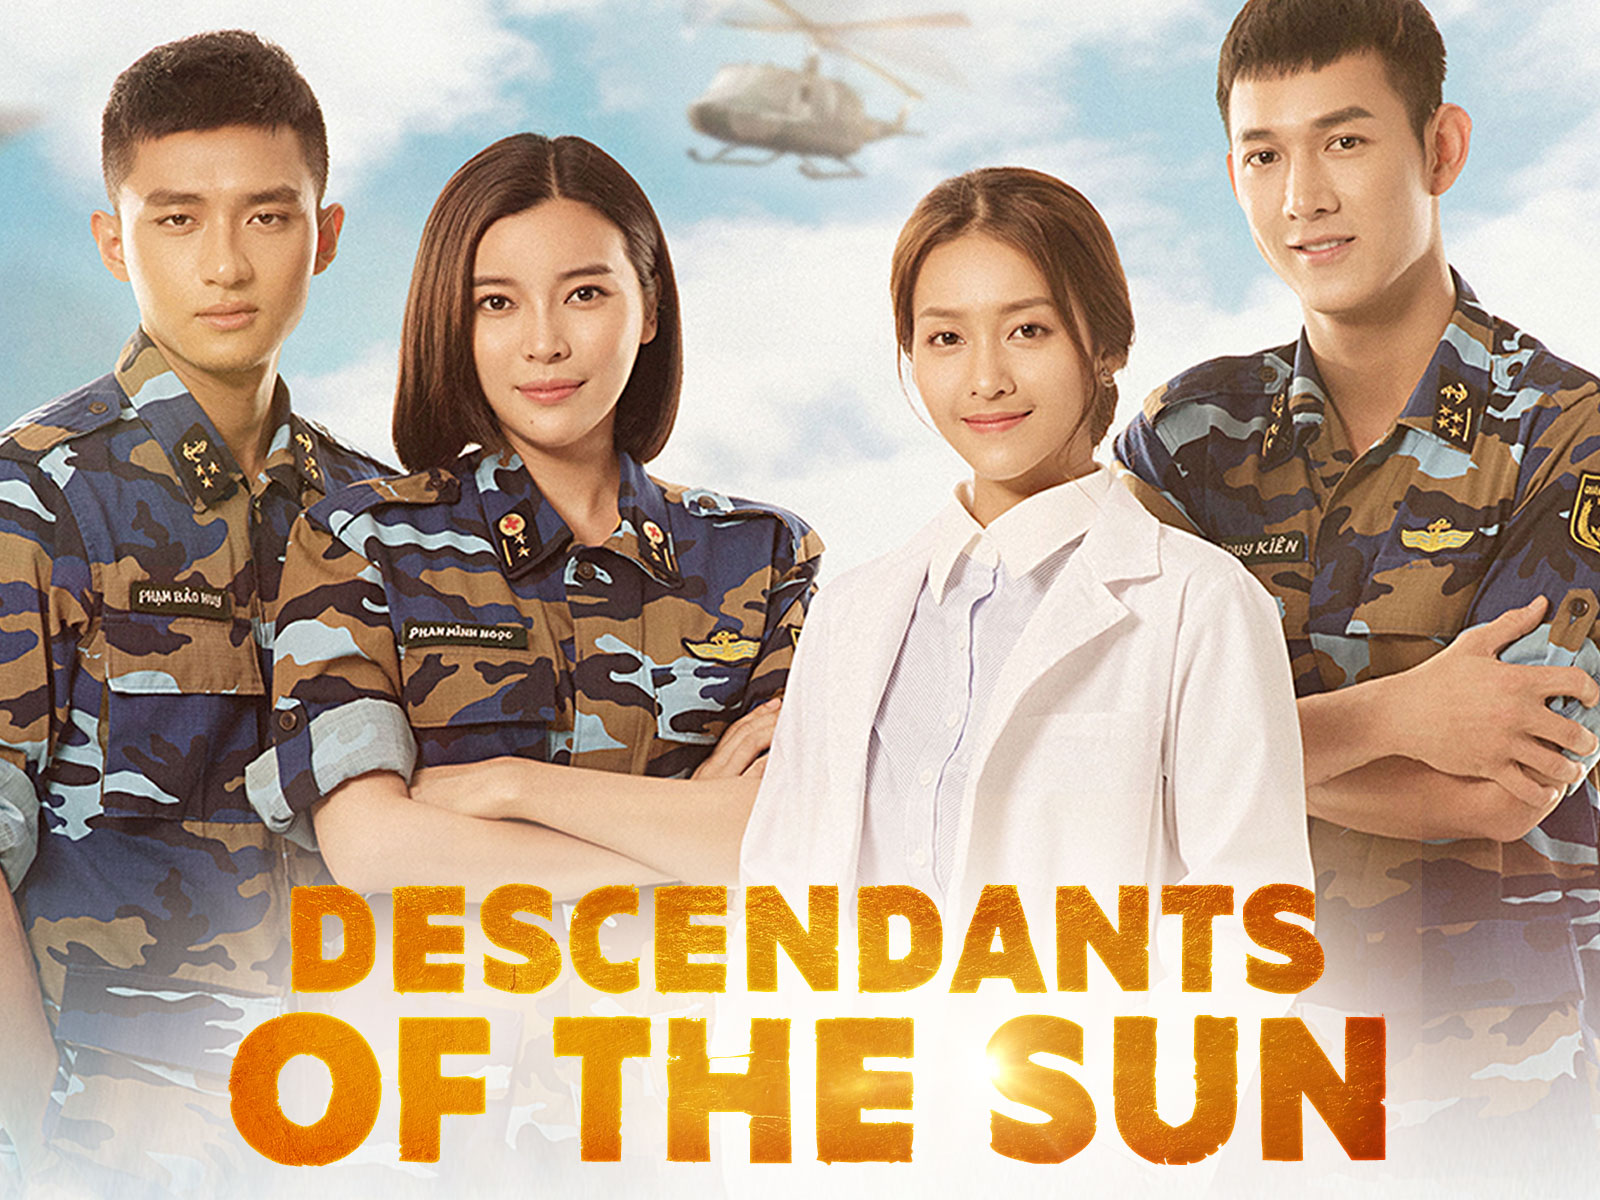 Descendants of the Sun Drama Overview